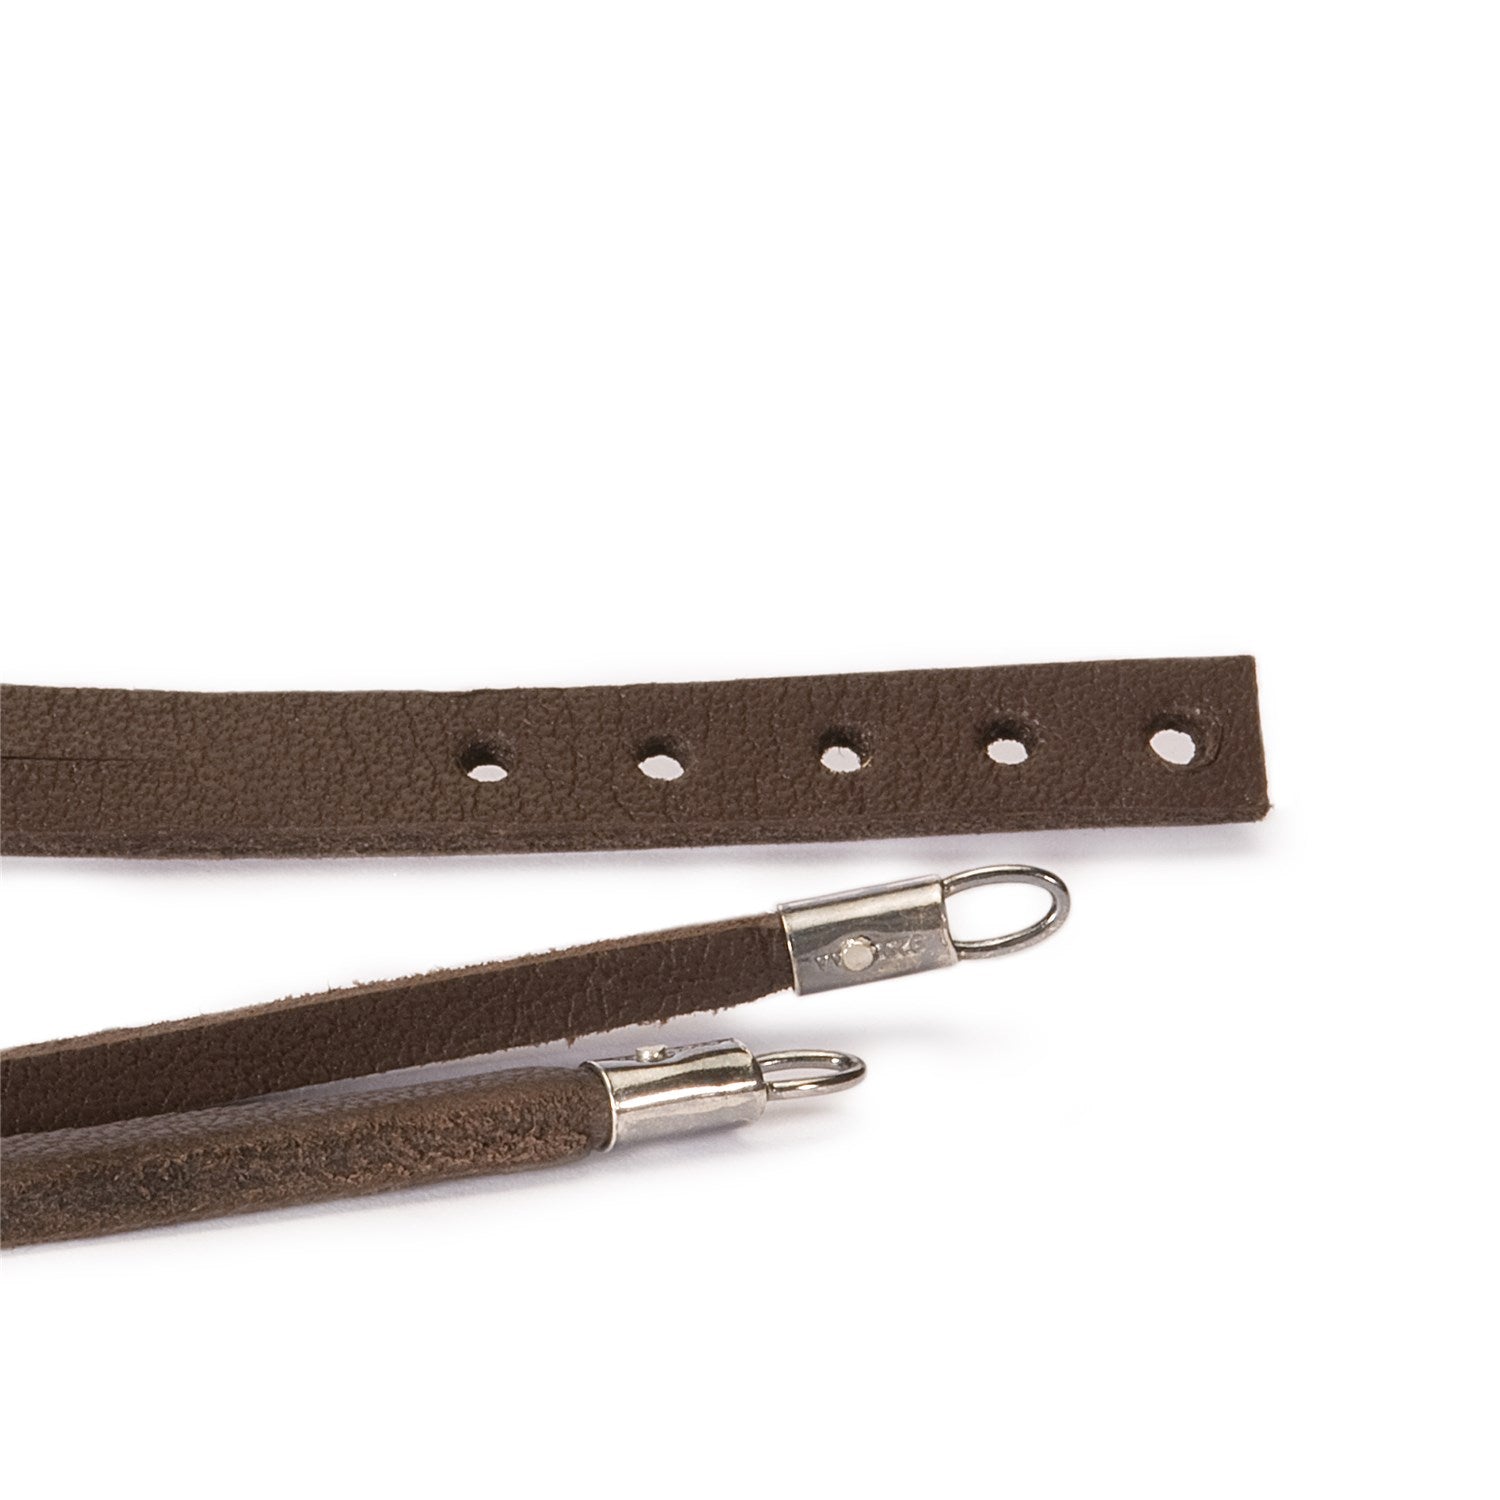 Leather bracelet - three nutbrown stripes, dark brown string